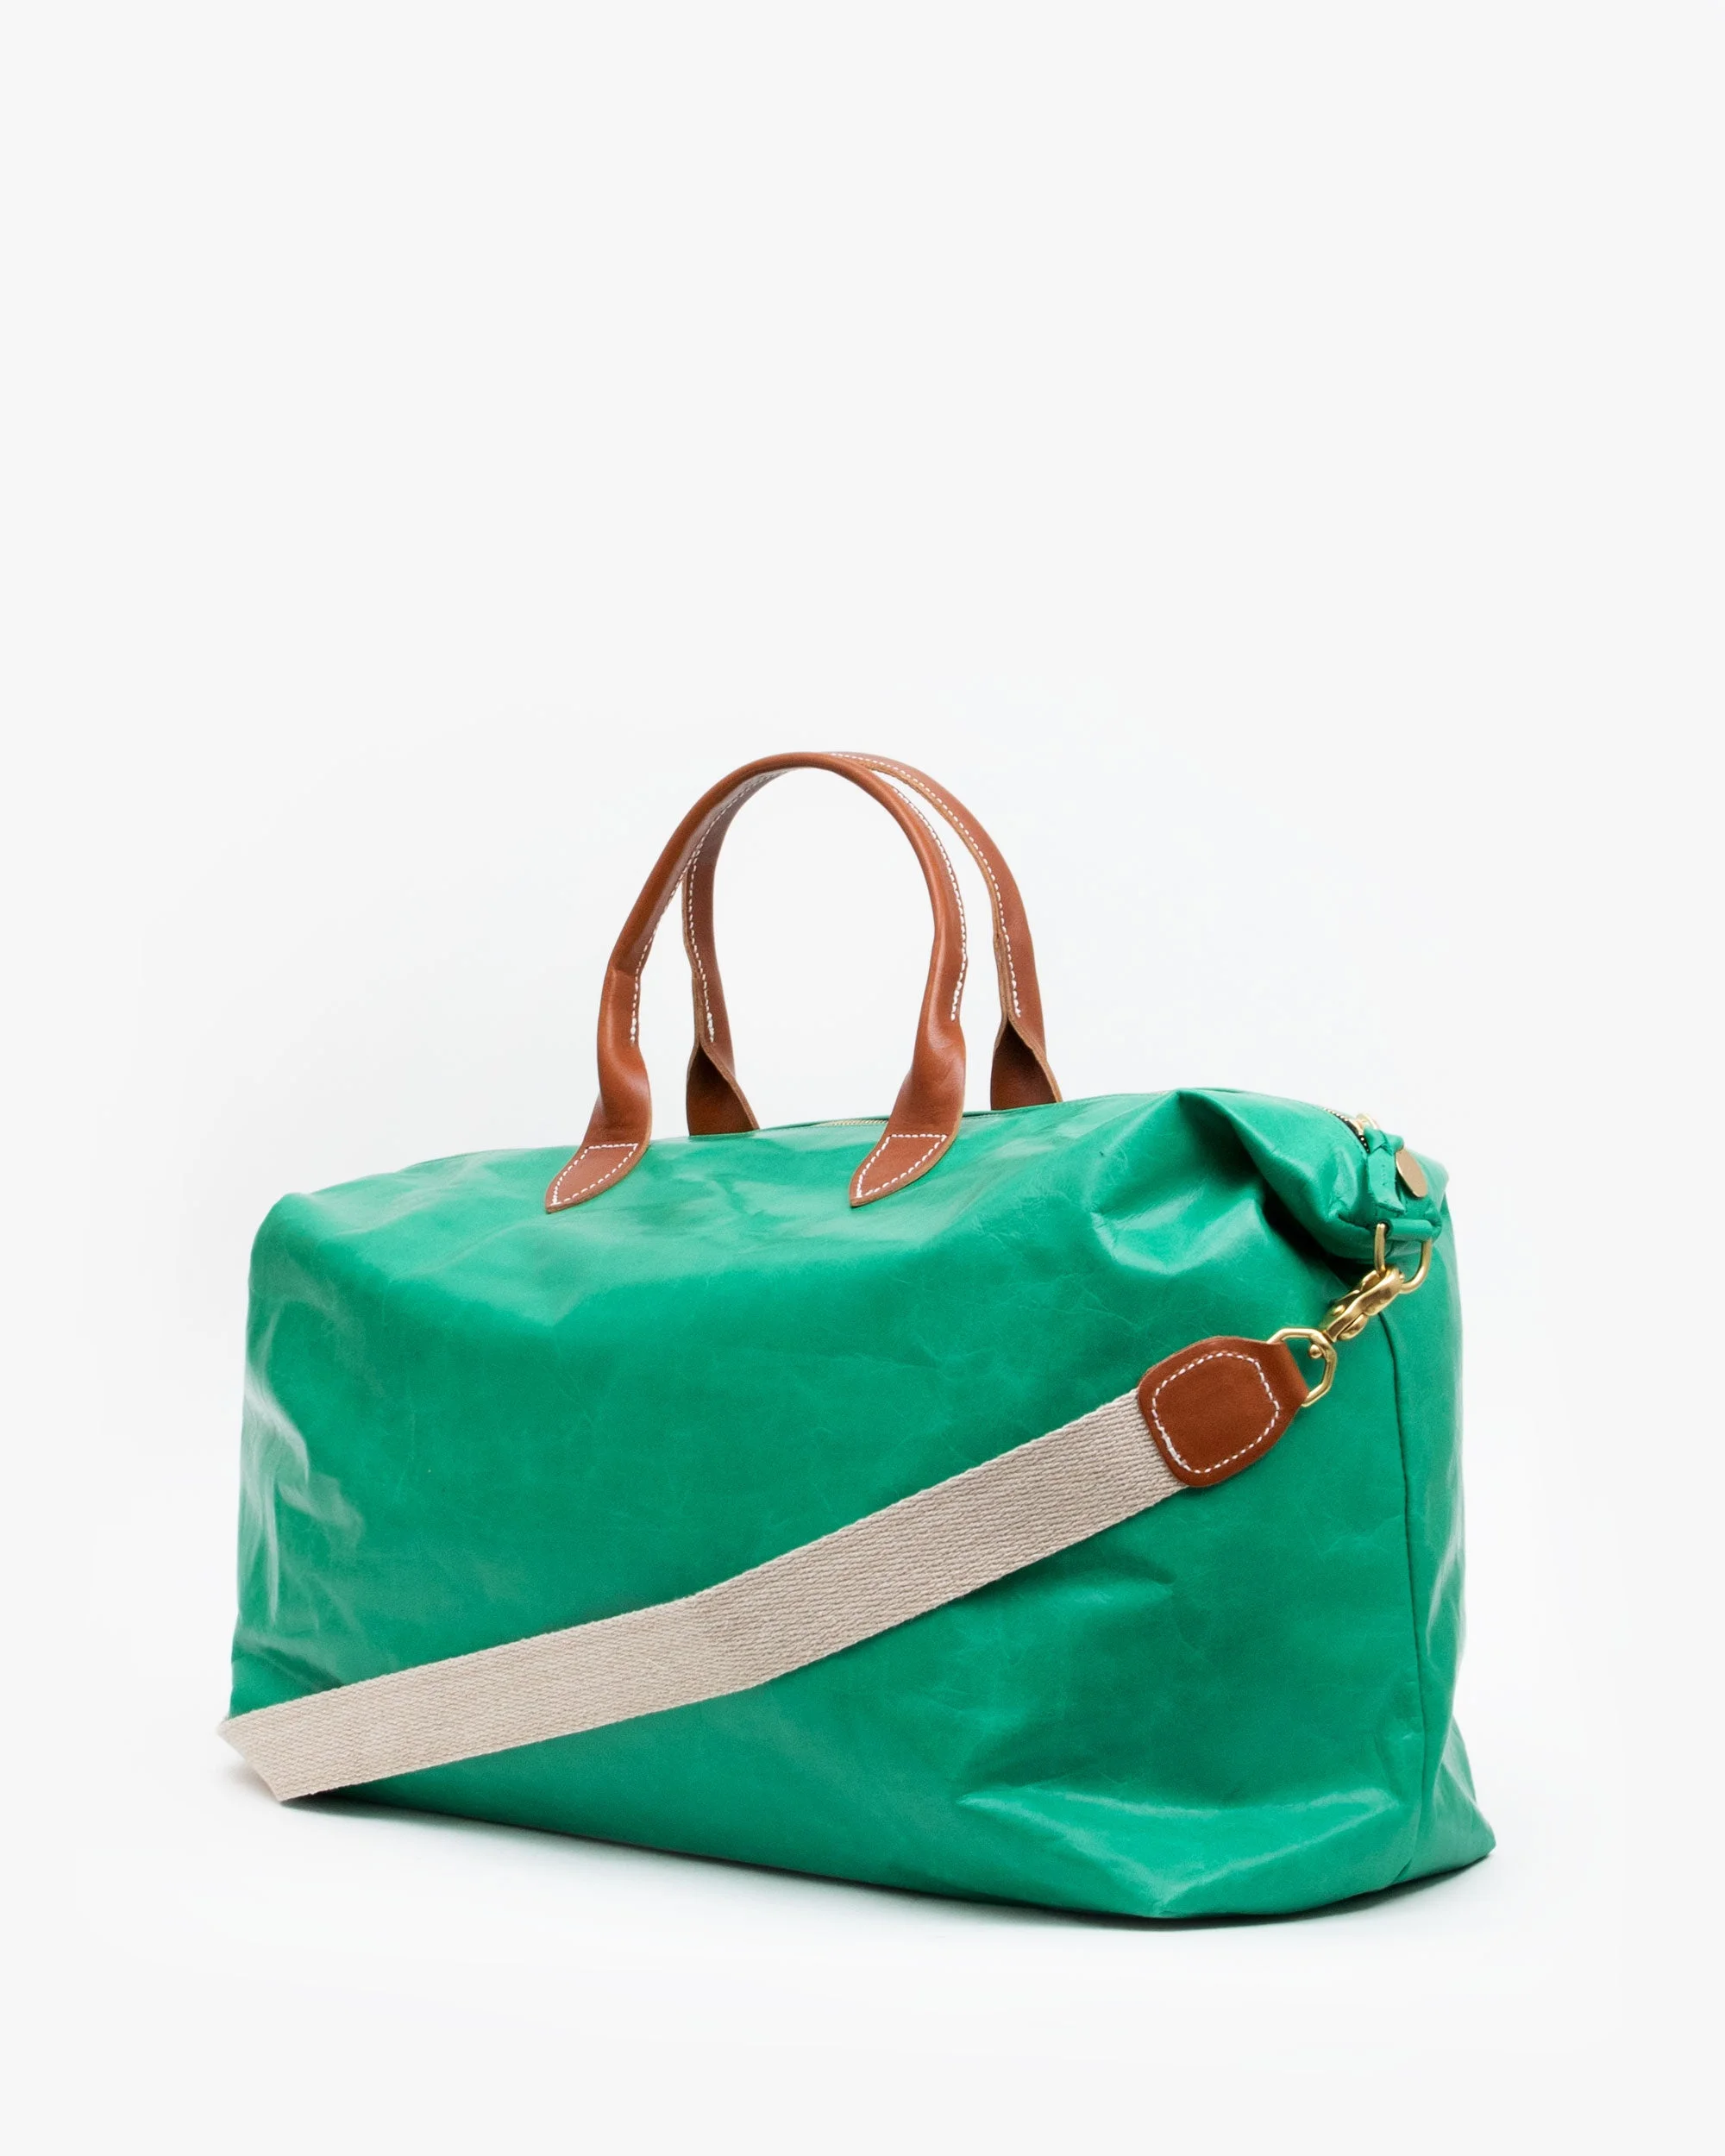 The Clare V. Bag Dupe Landed at Target & It's Under $30 – StyleCaster